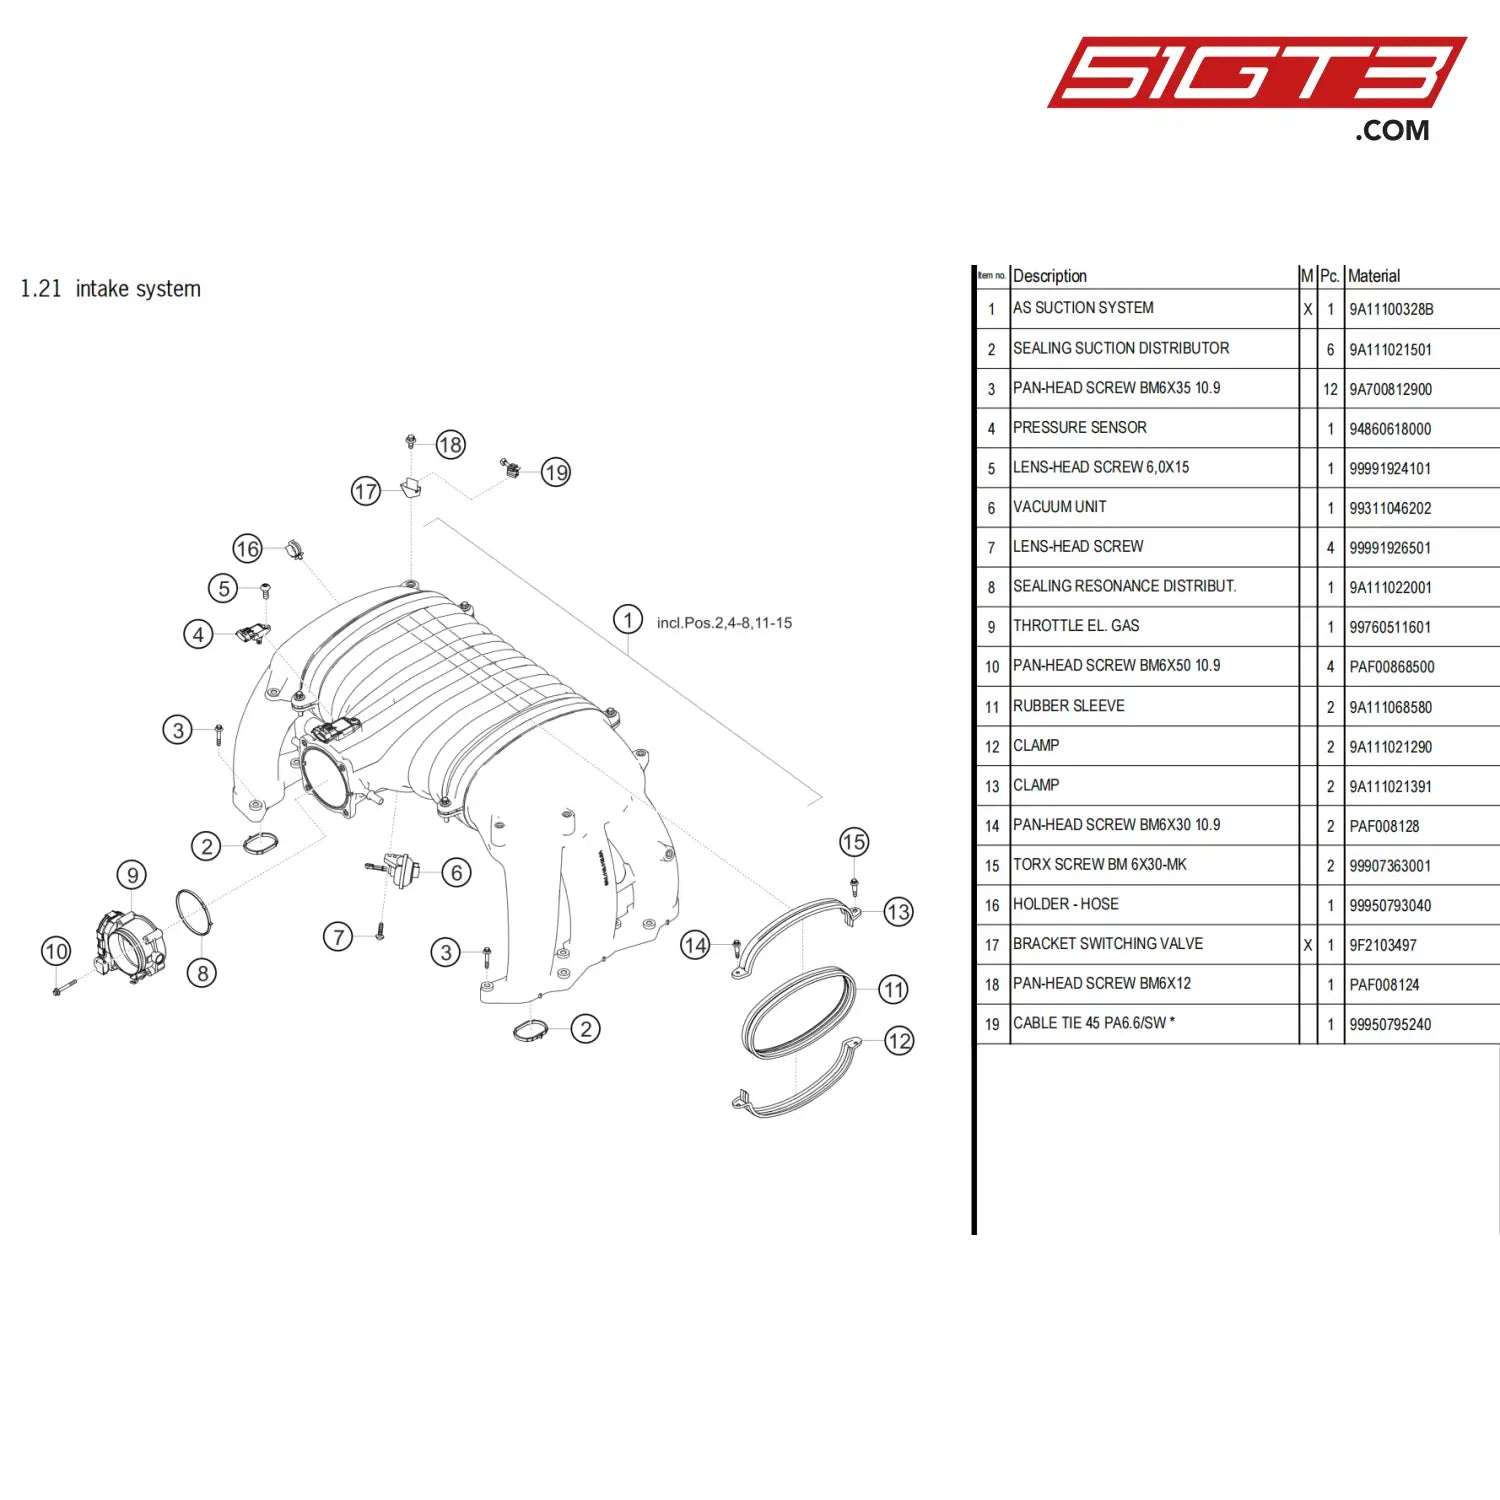 Throttle El. Gas - 99760511601 [Porsche 718 Cayman Gt4 Clubsport] Intake System